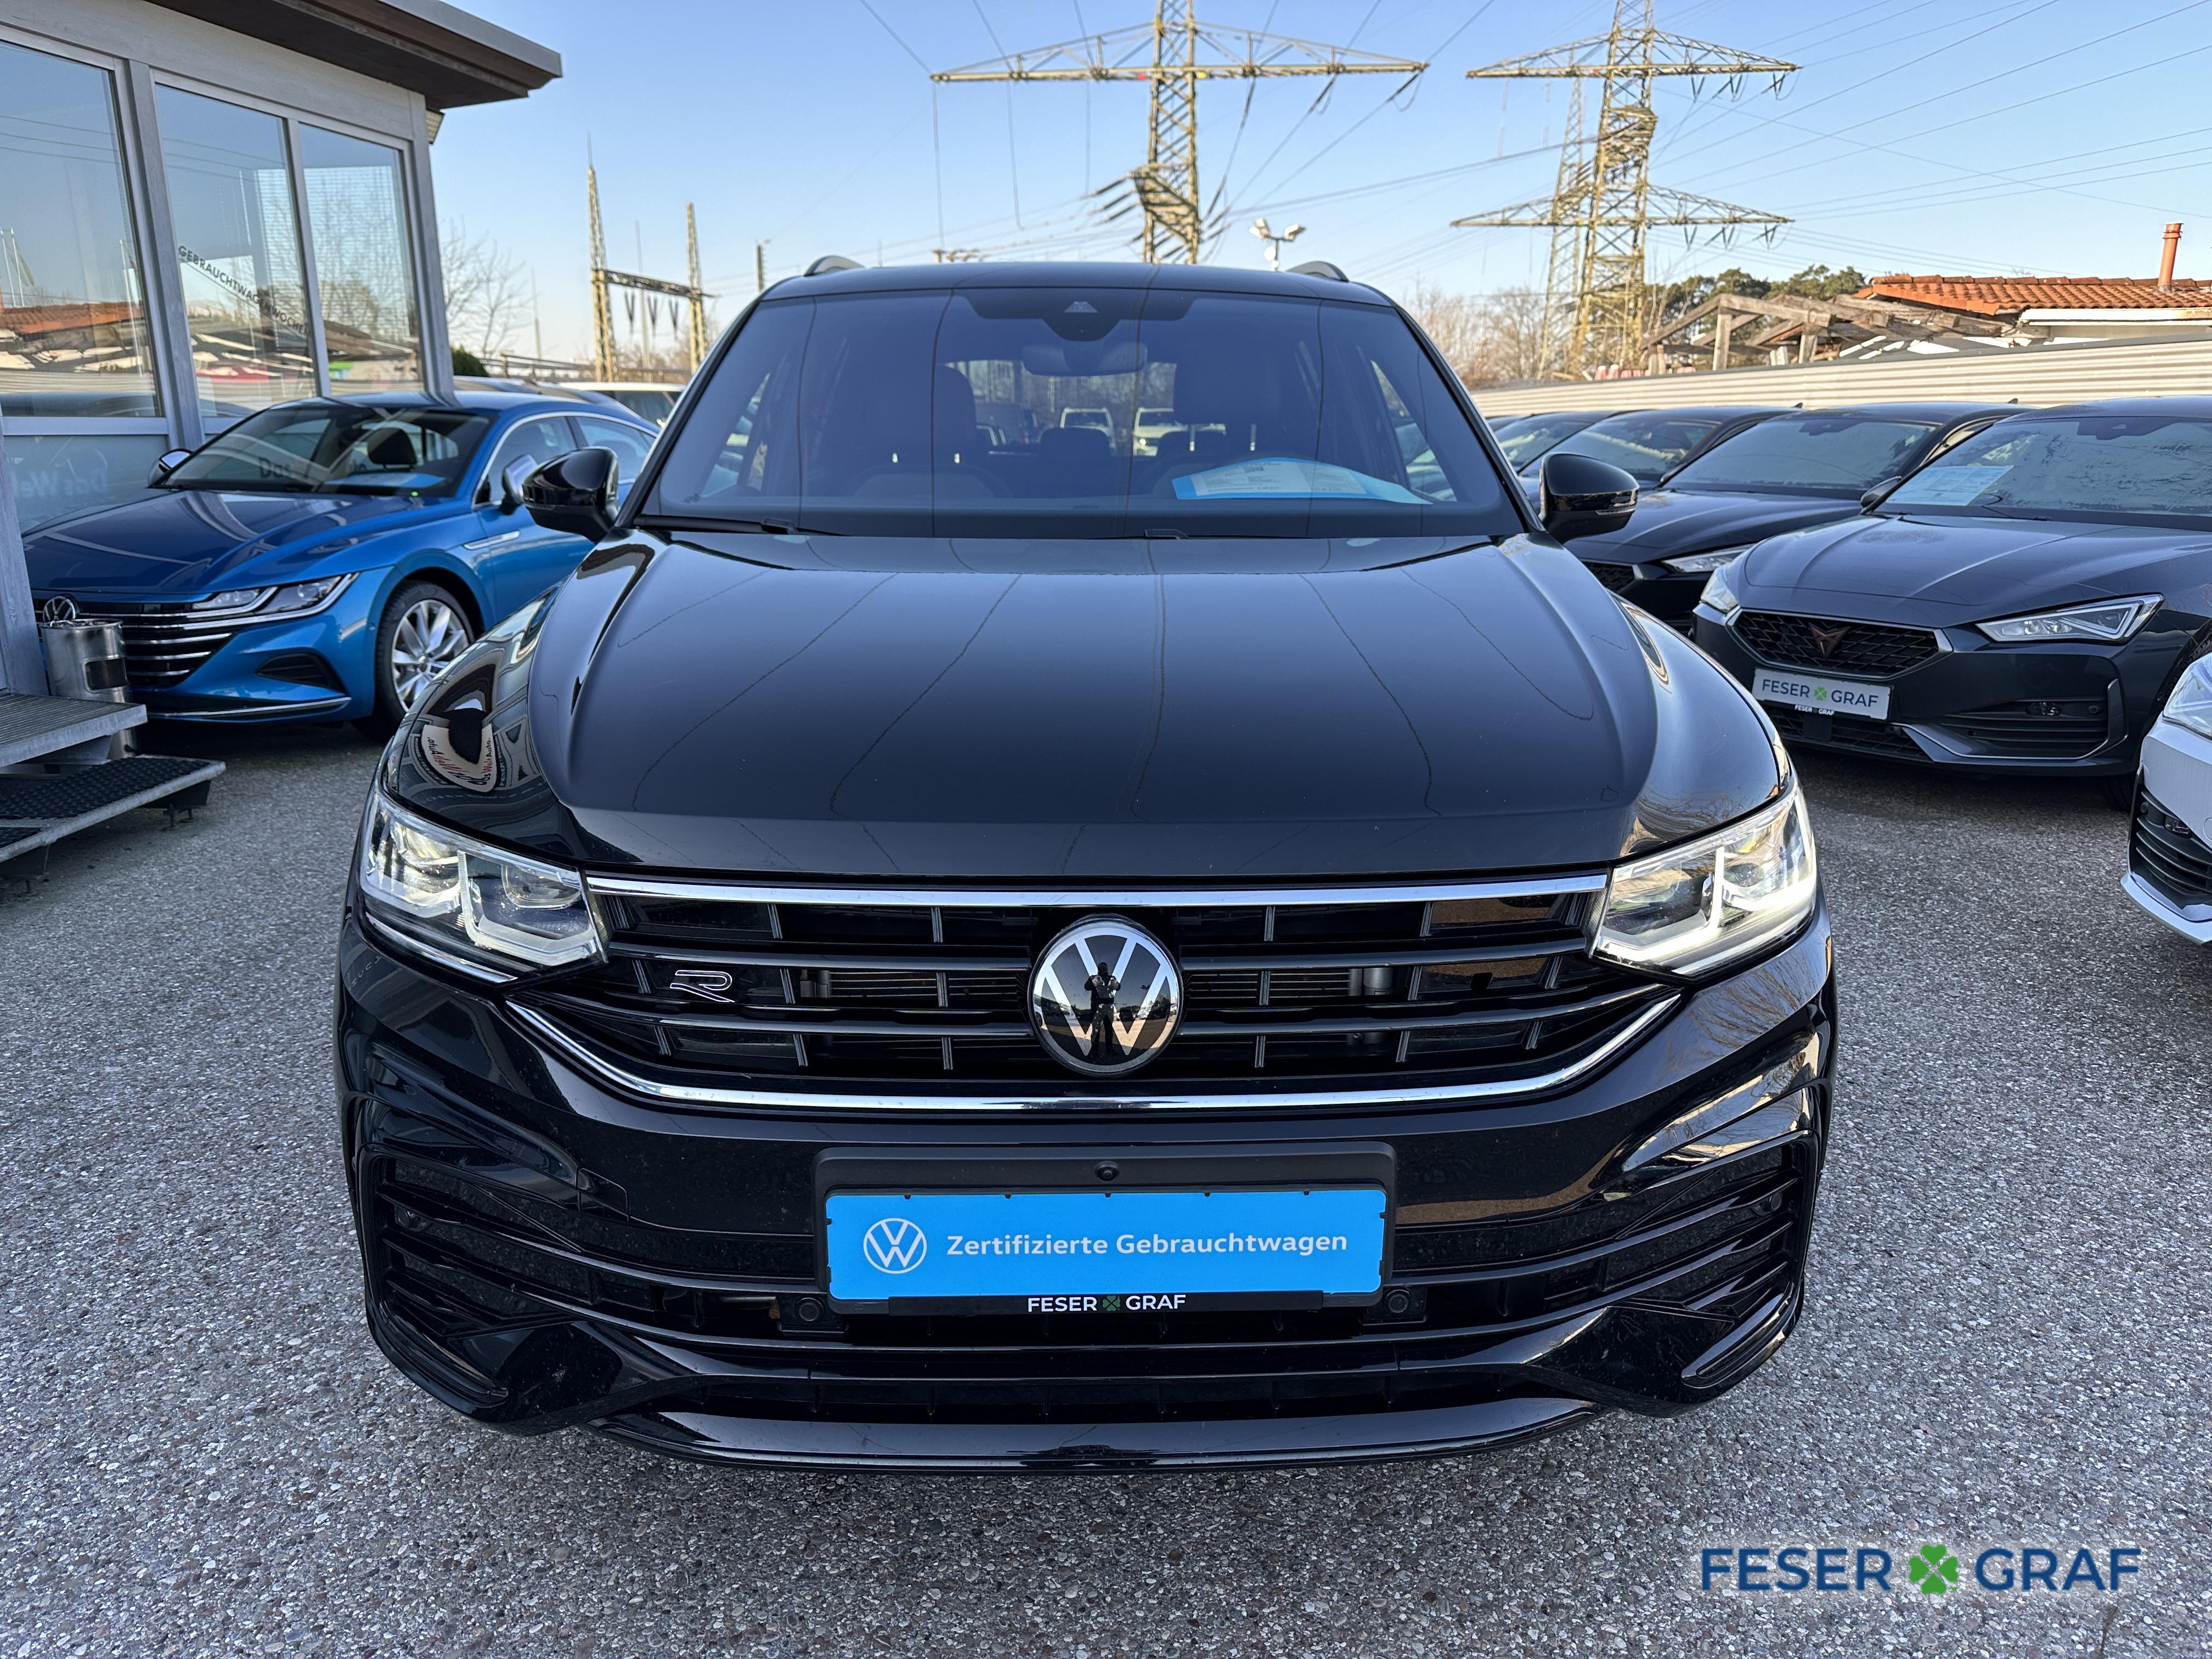 VW TIGUAN kaufen 🍀 Feser-Graf Fahrzeugsuche